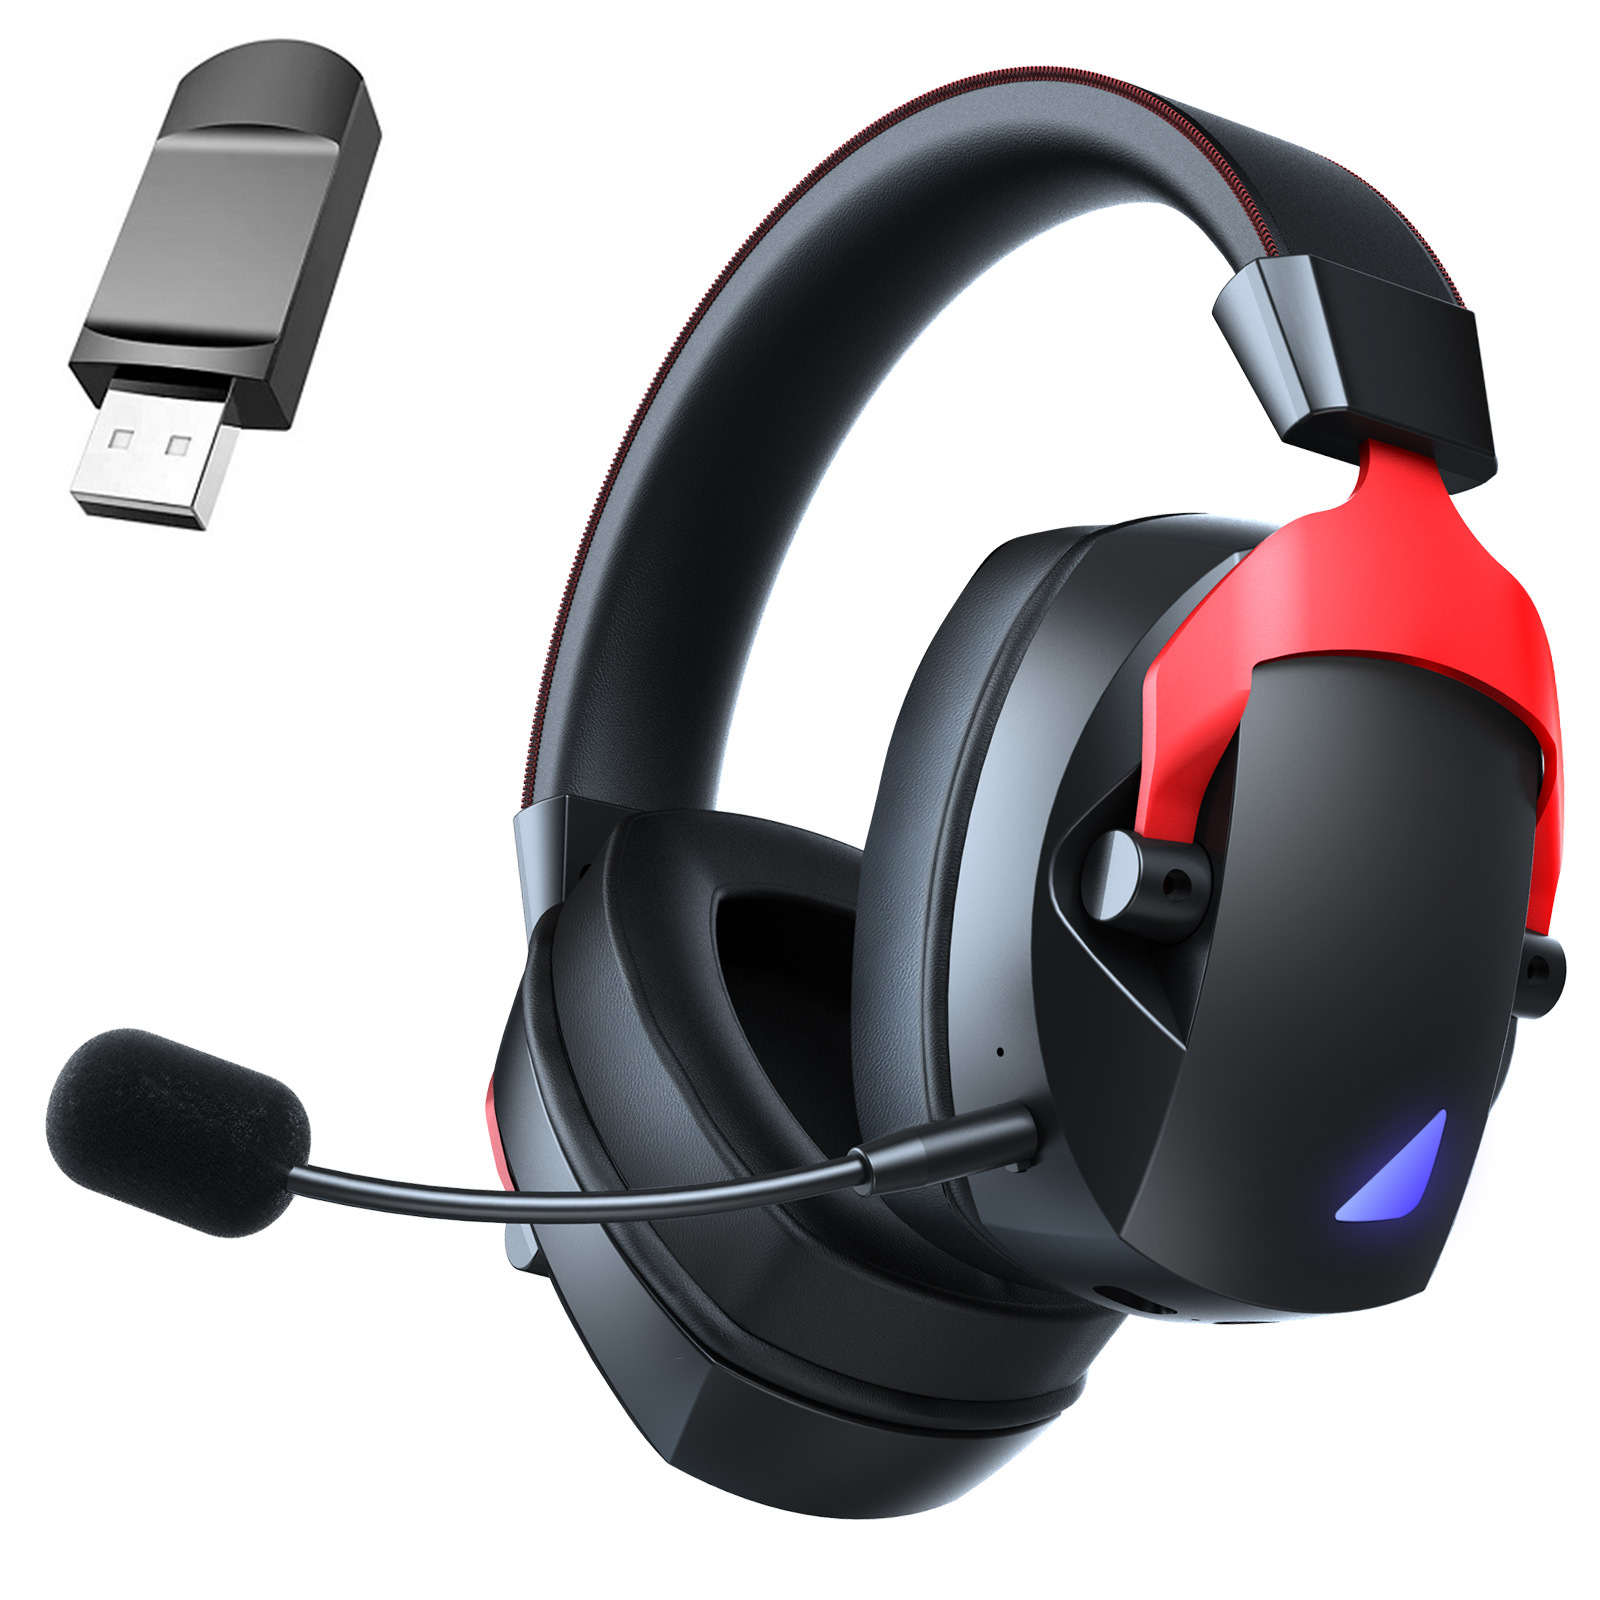 BL-200 Bluetooth Headphones Stereo Over Ear Wireless Headset Professional Recording Studio Monitor DJ Gaming Headphones